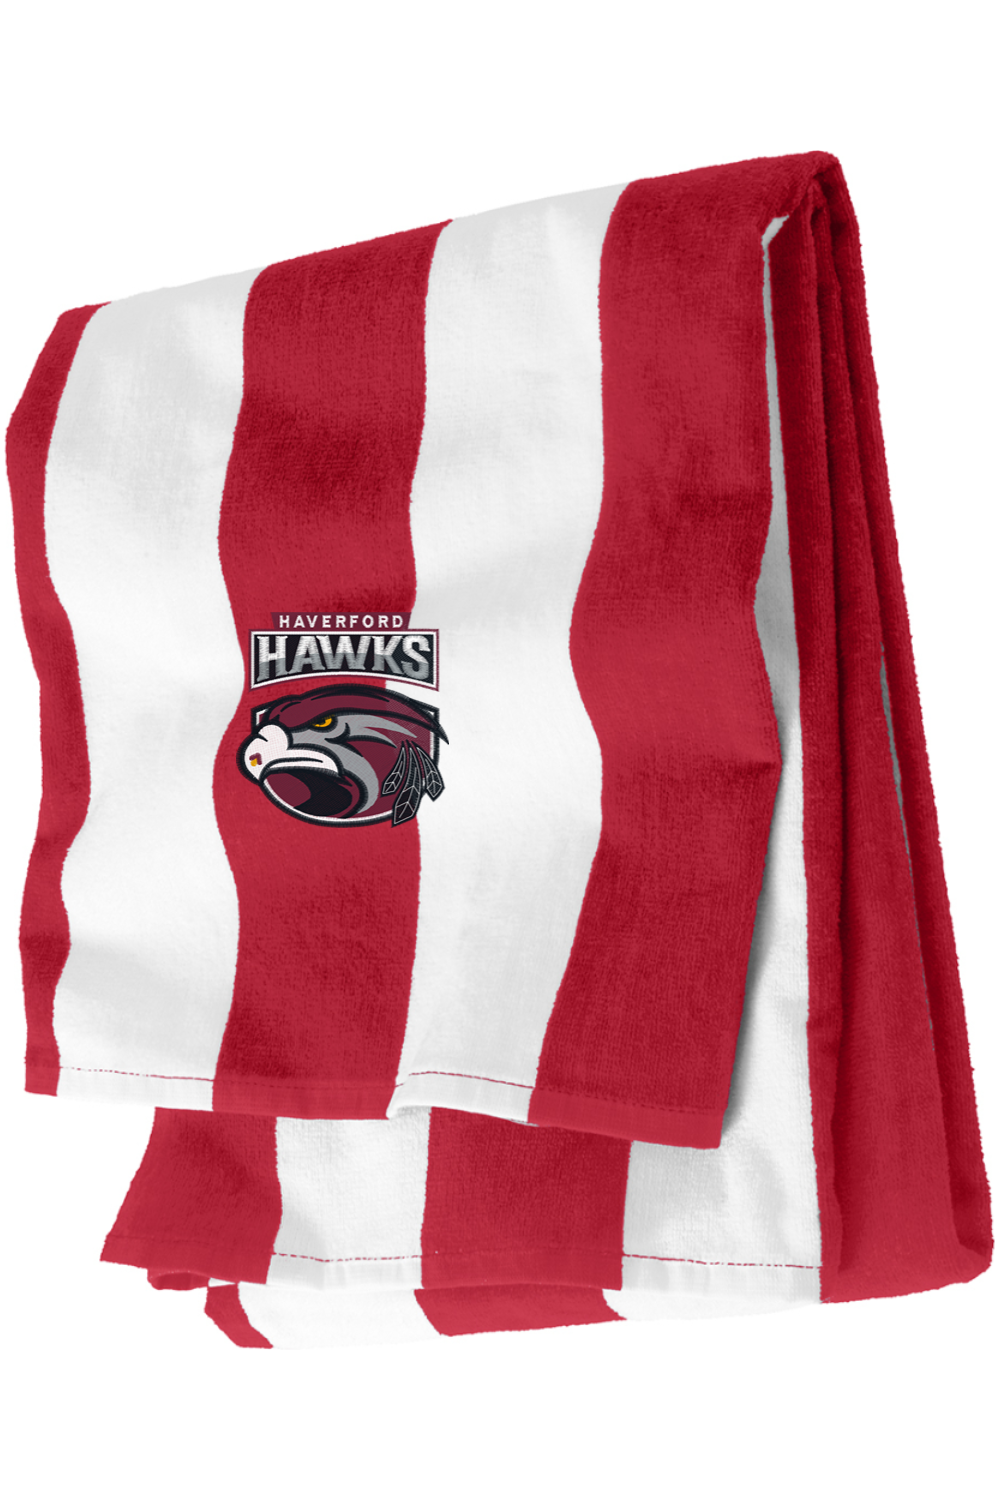 Hawks Embroidered Port Authority Cabana Stripe Beach Towel